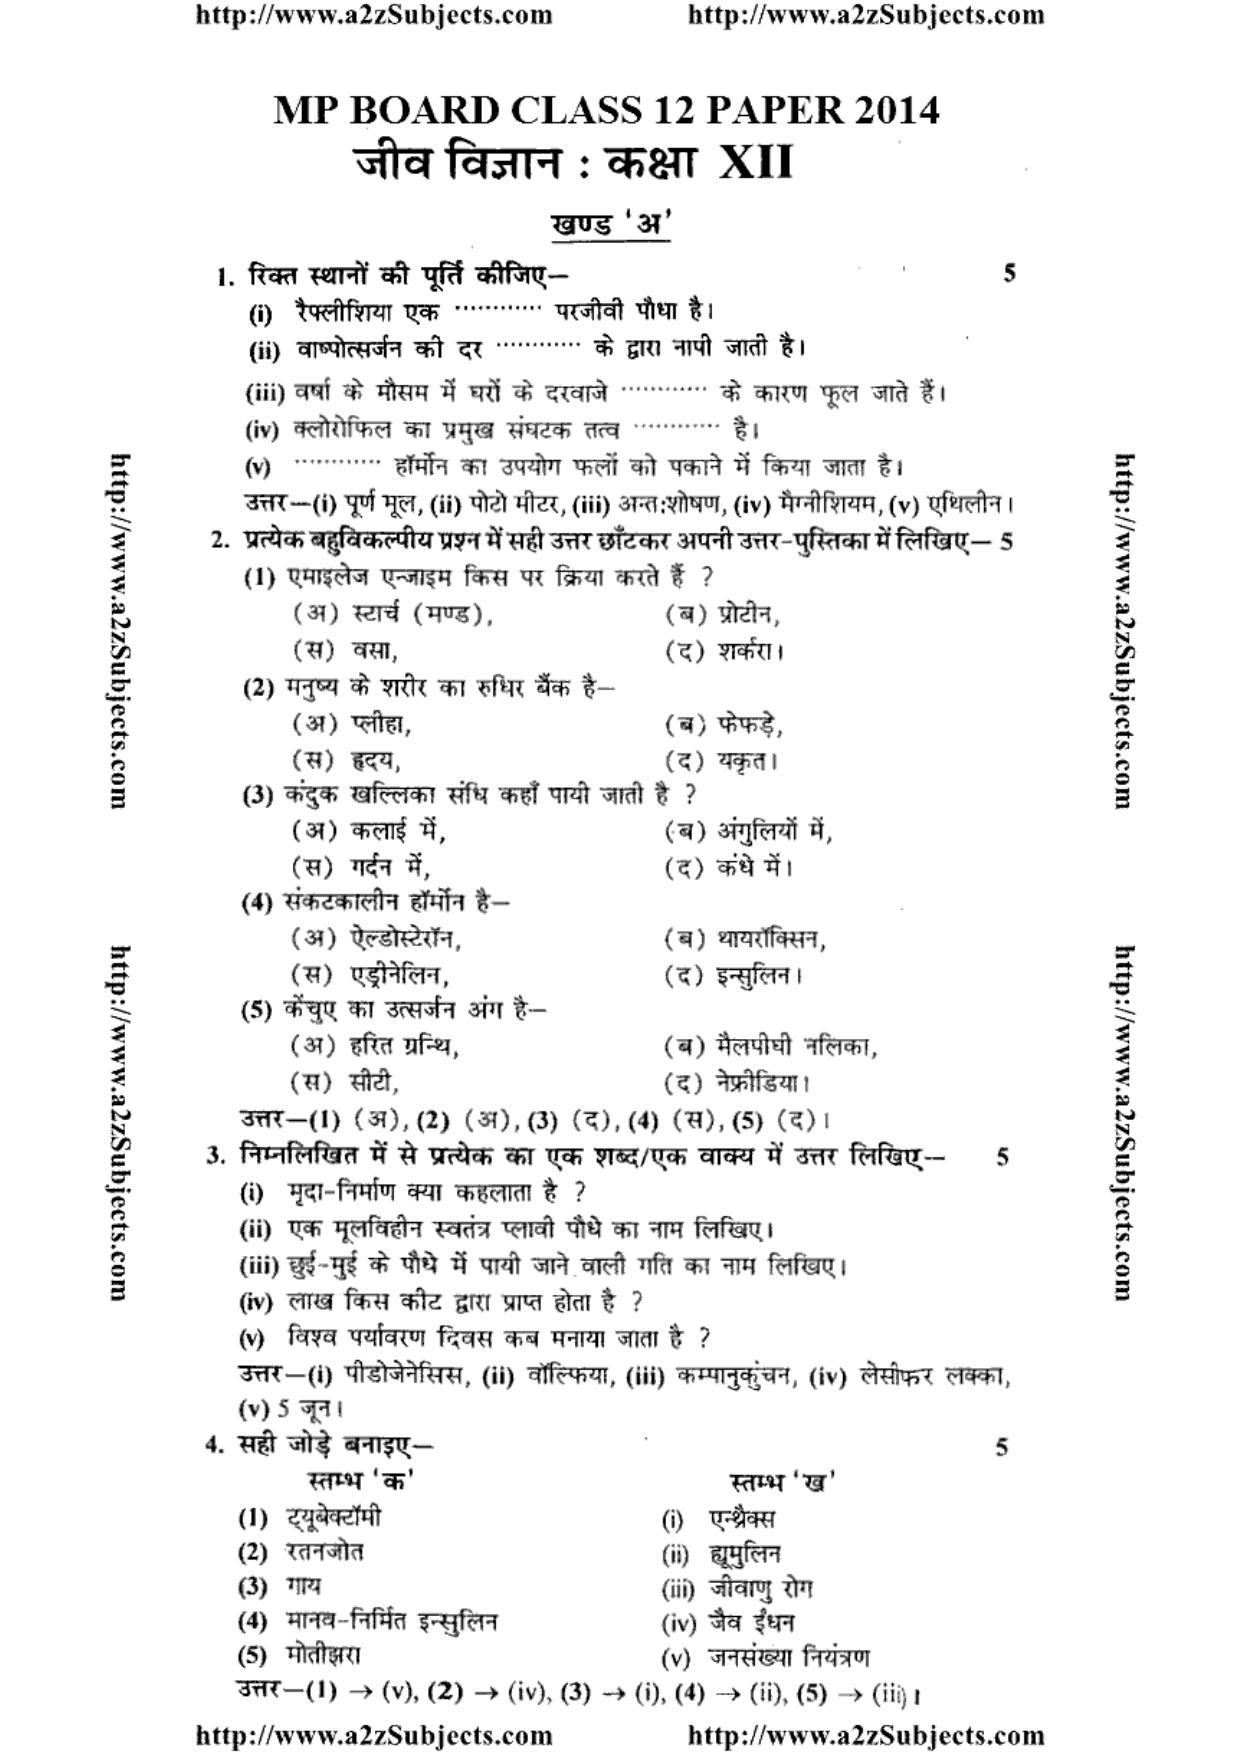 MP Board Class 12 Biology (Hindi Medium) 2014 Question Paper - Page 1